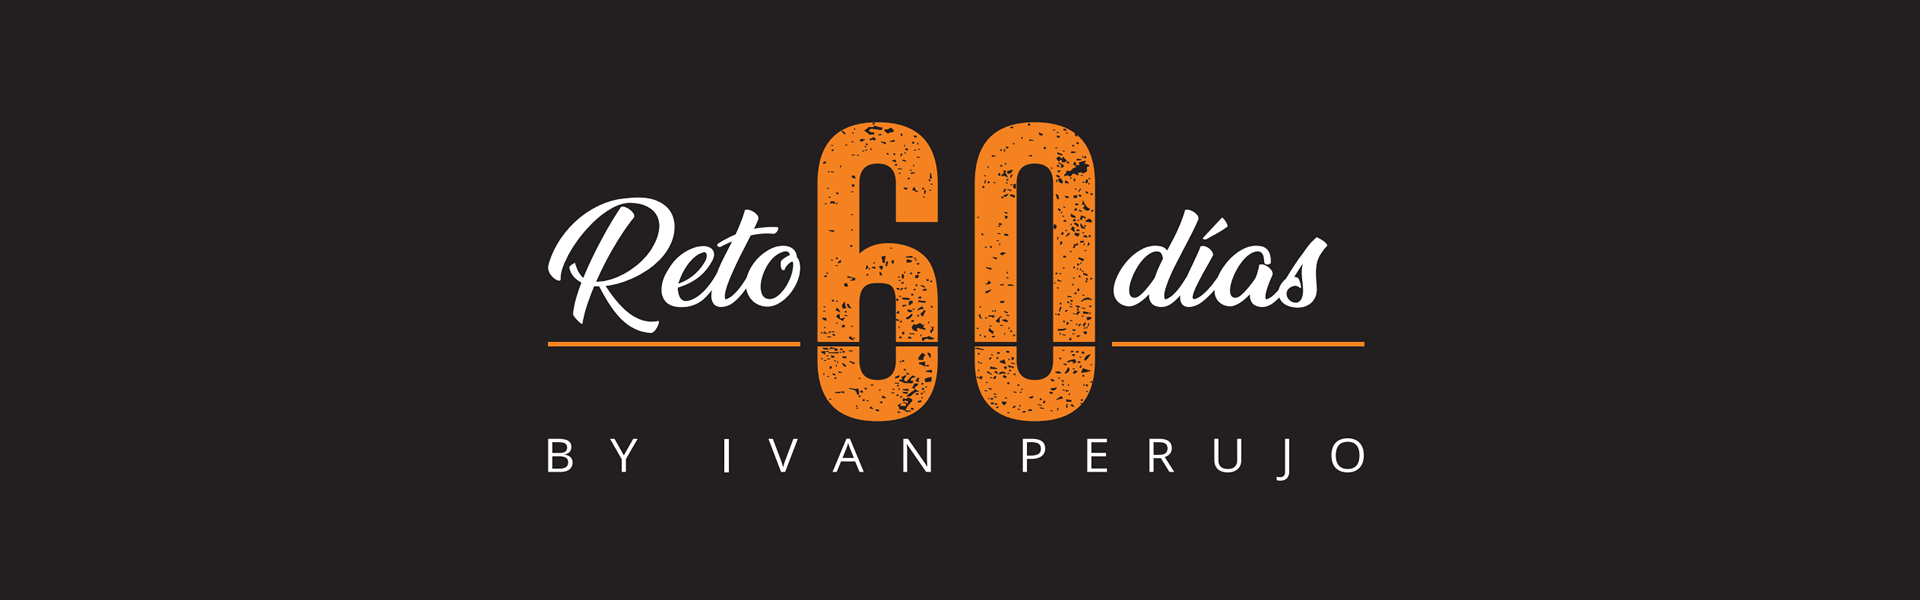 Reto 60 días by Iván Perujo